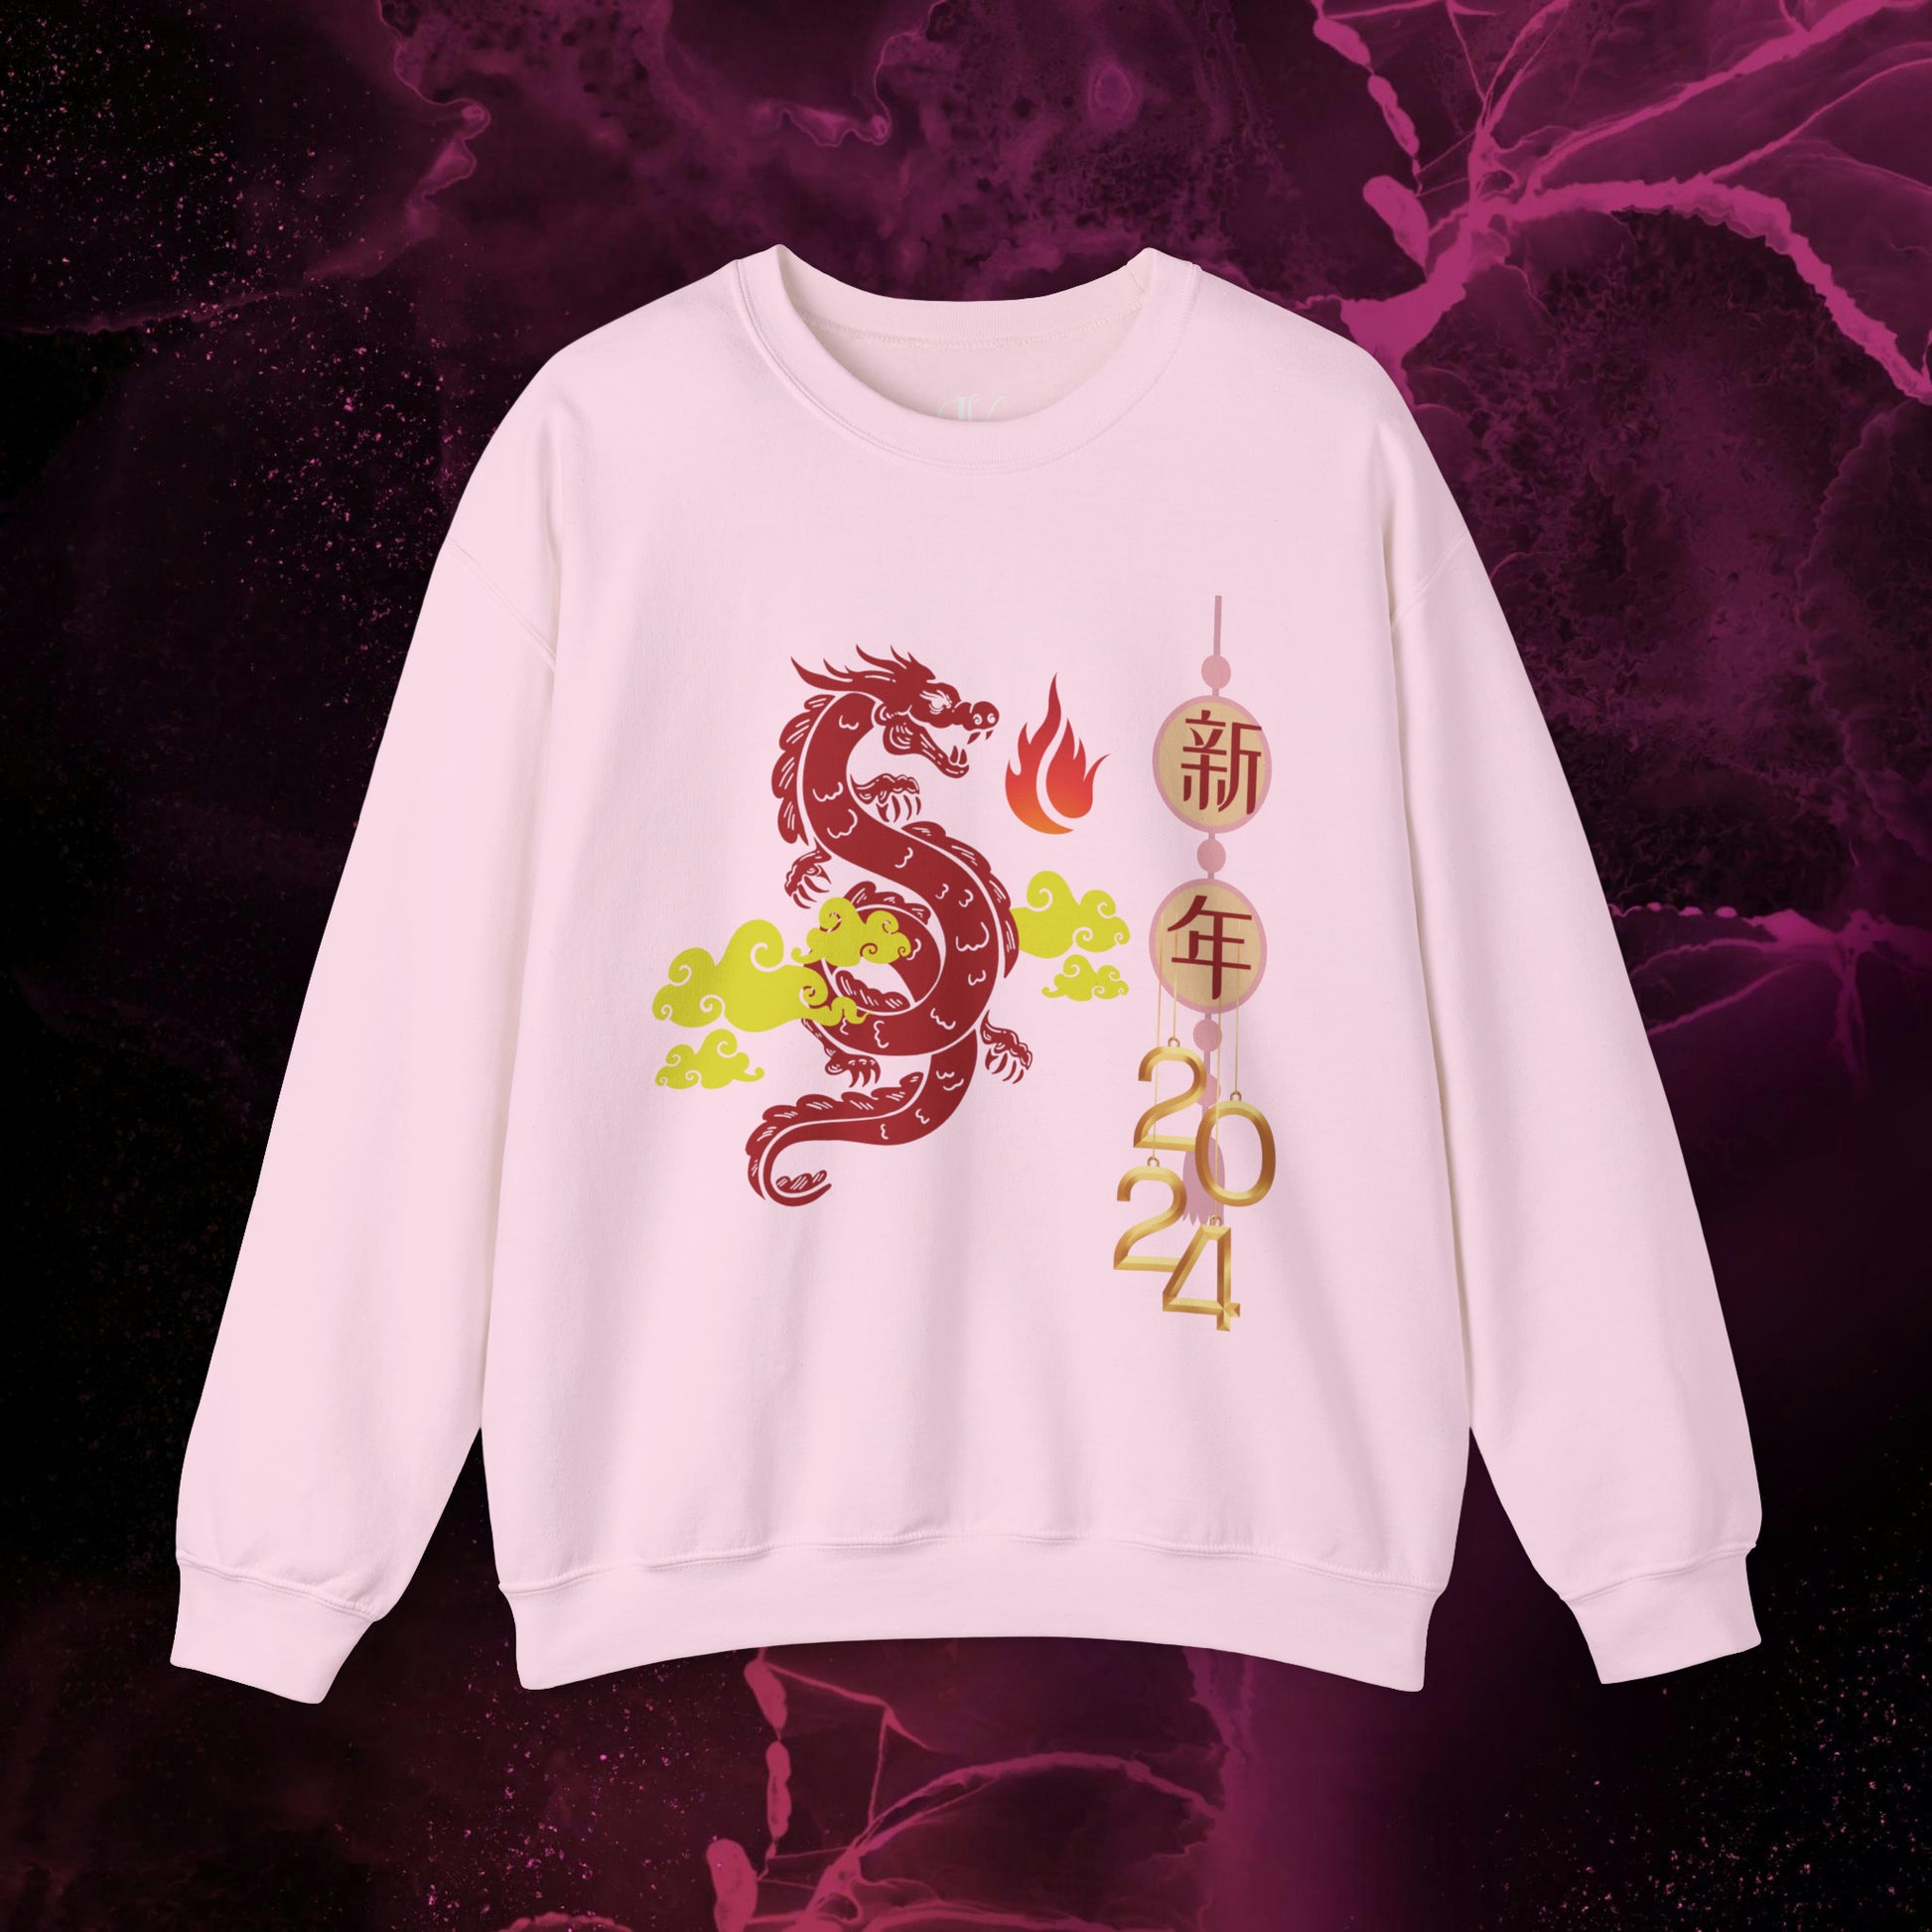 Year of the Dragon Sweatshirt - 2024 Chinese Zodiac Shirt for Lunar New Year Event Sweatshirt S Light Pink 